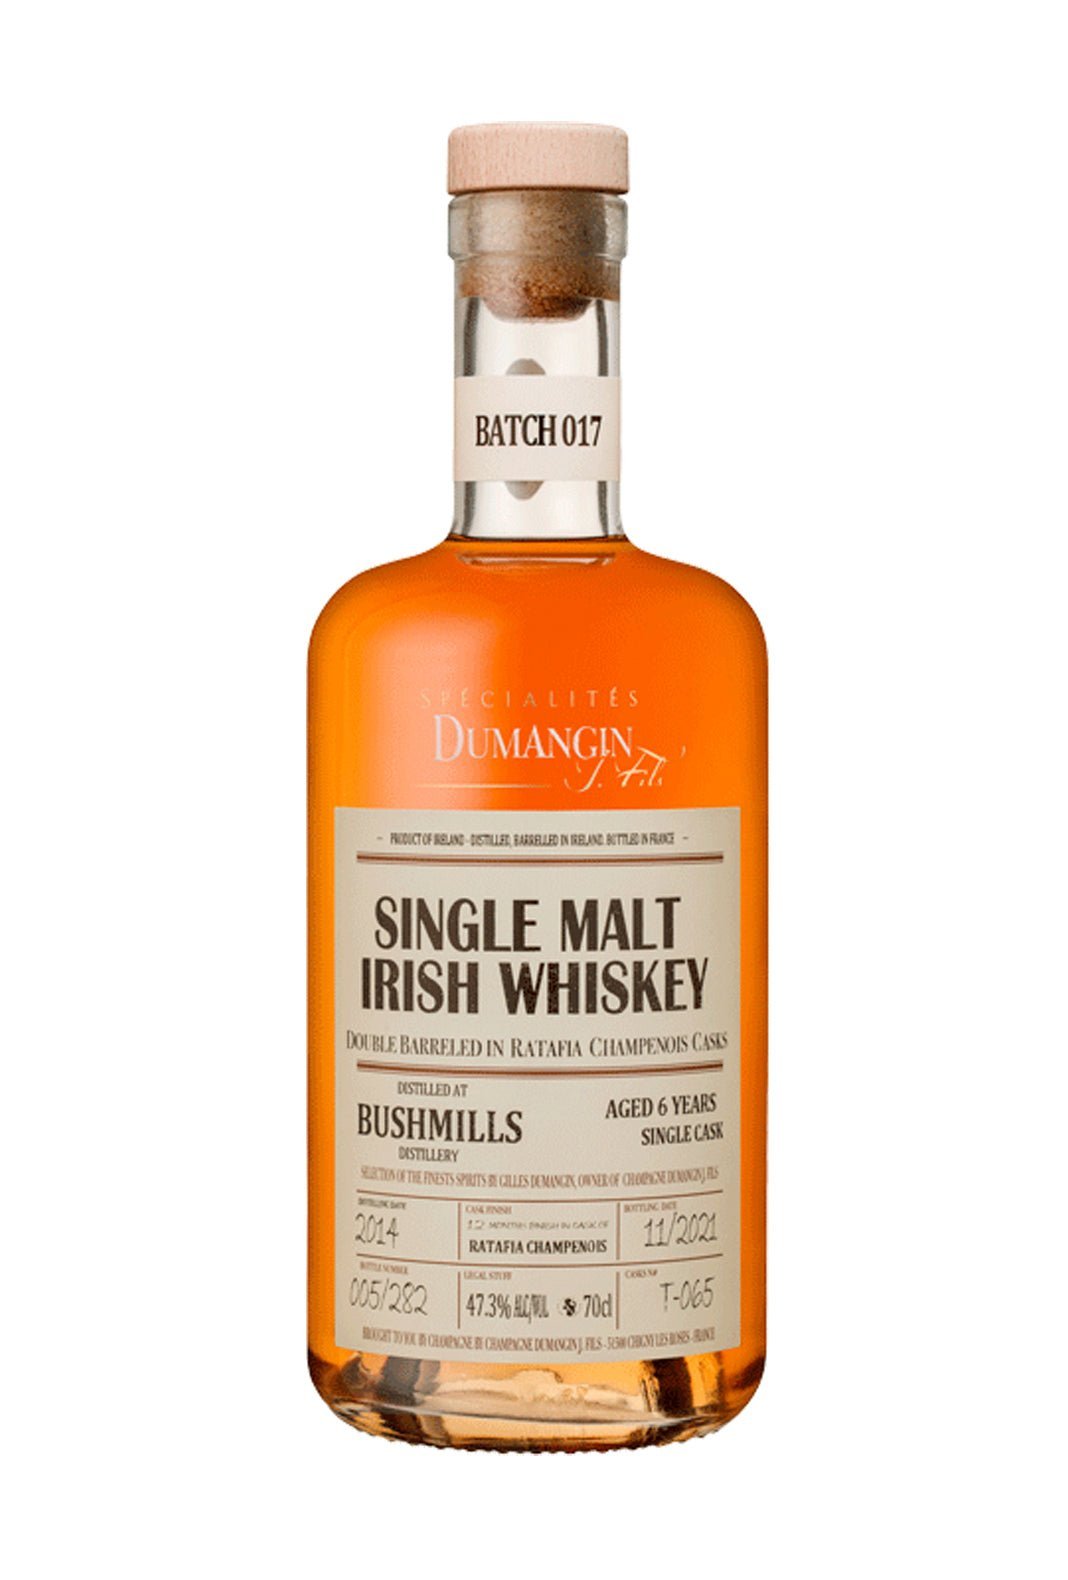 Dumangin Batch 017 Bushmills (Ireland) 2014 Single Malt Whisky 47.3% 700ml | Whiskey | Shop online at Spirits of France